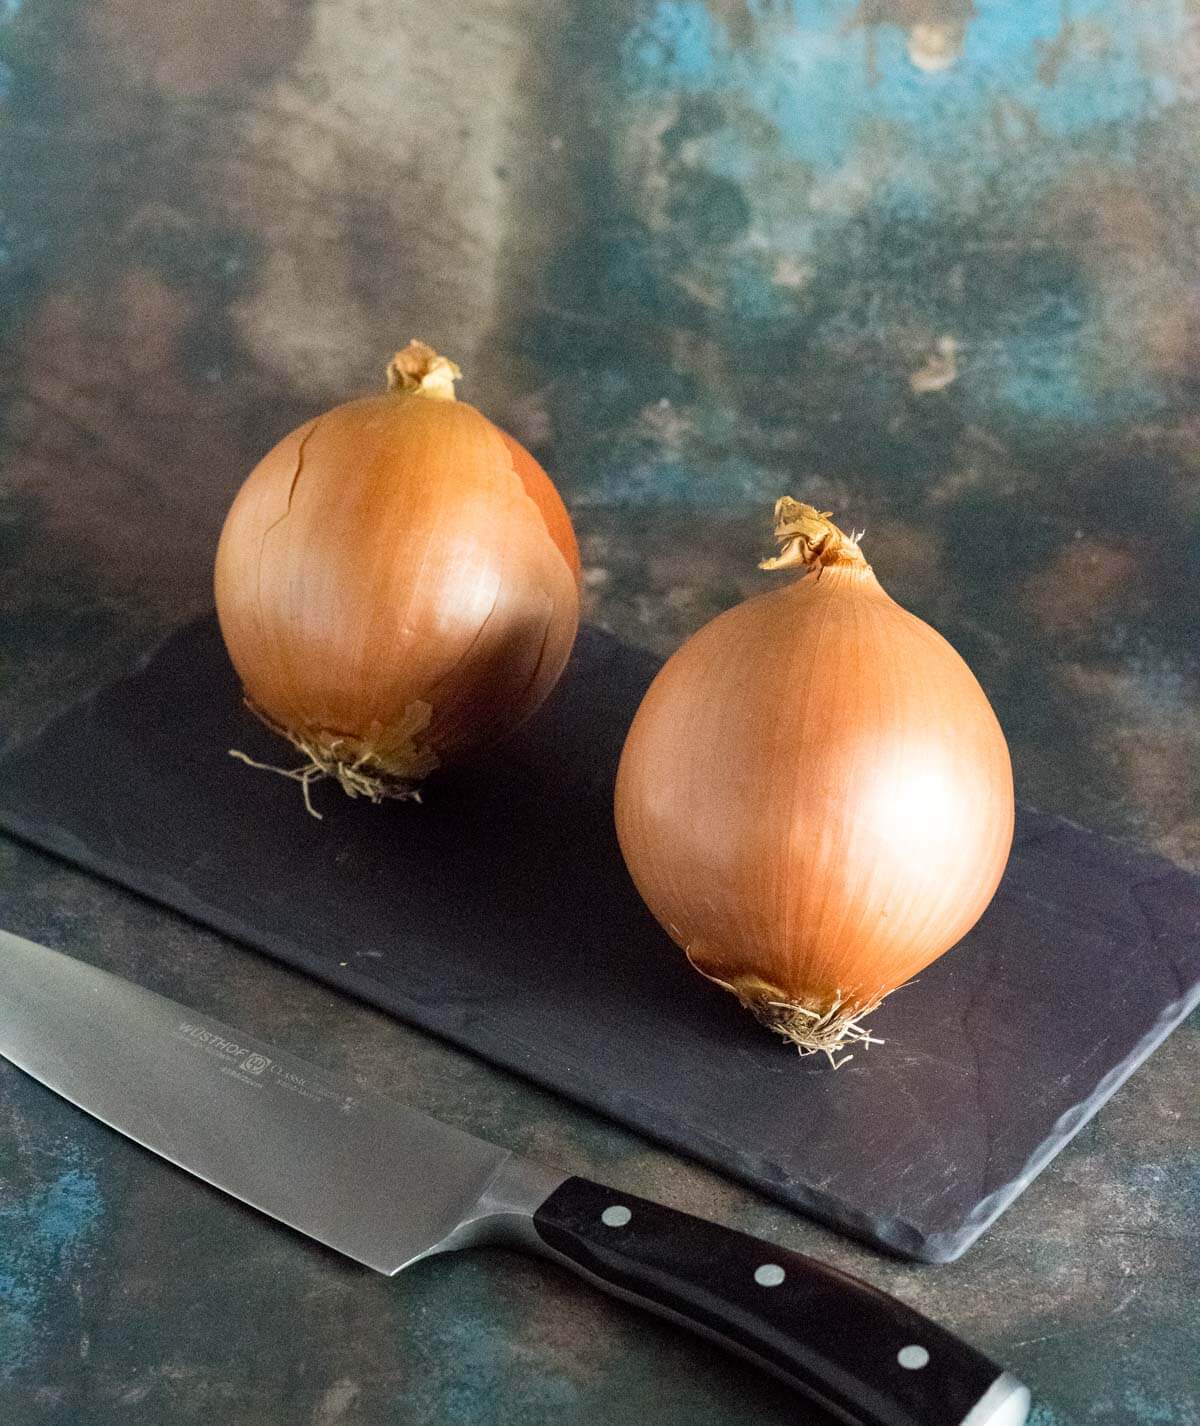 Whole onions with a sharp knife.